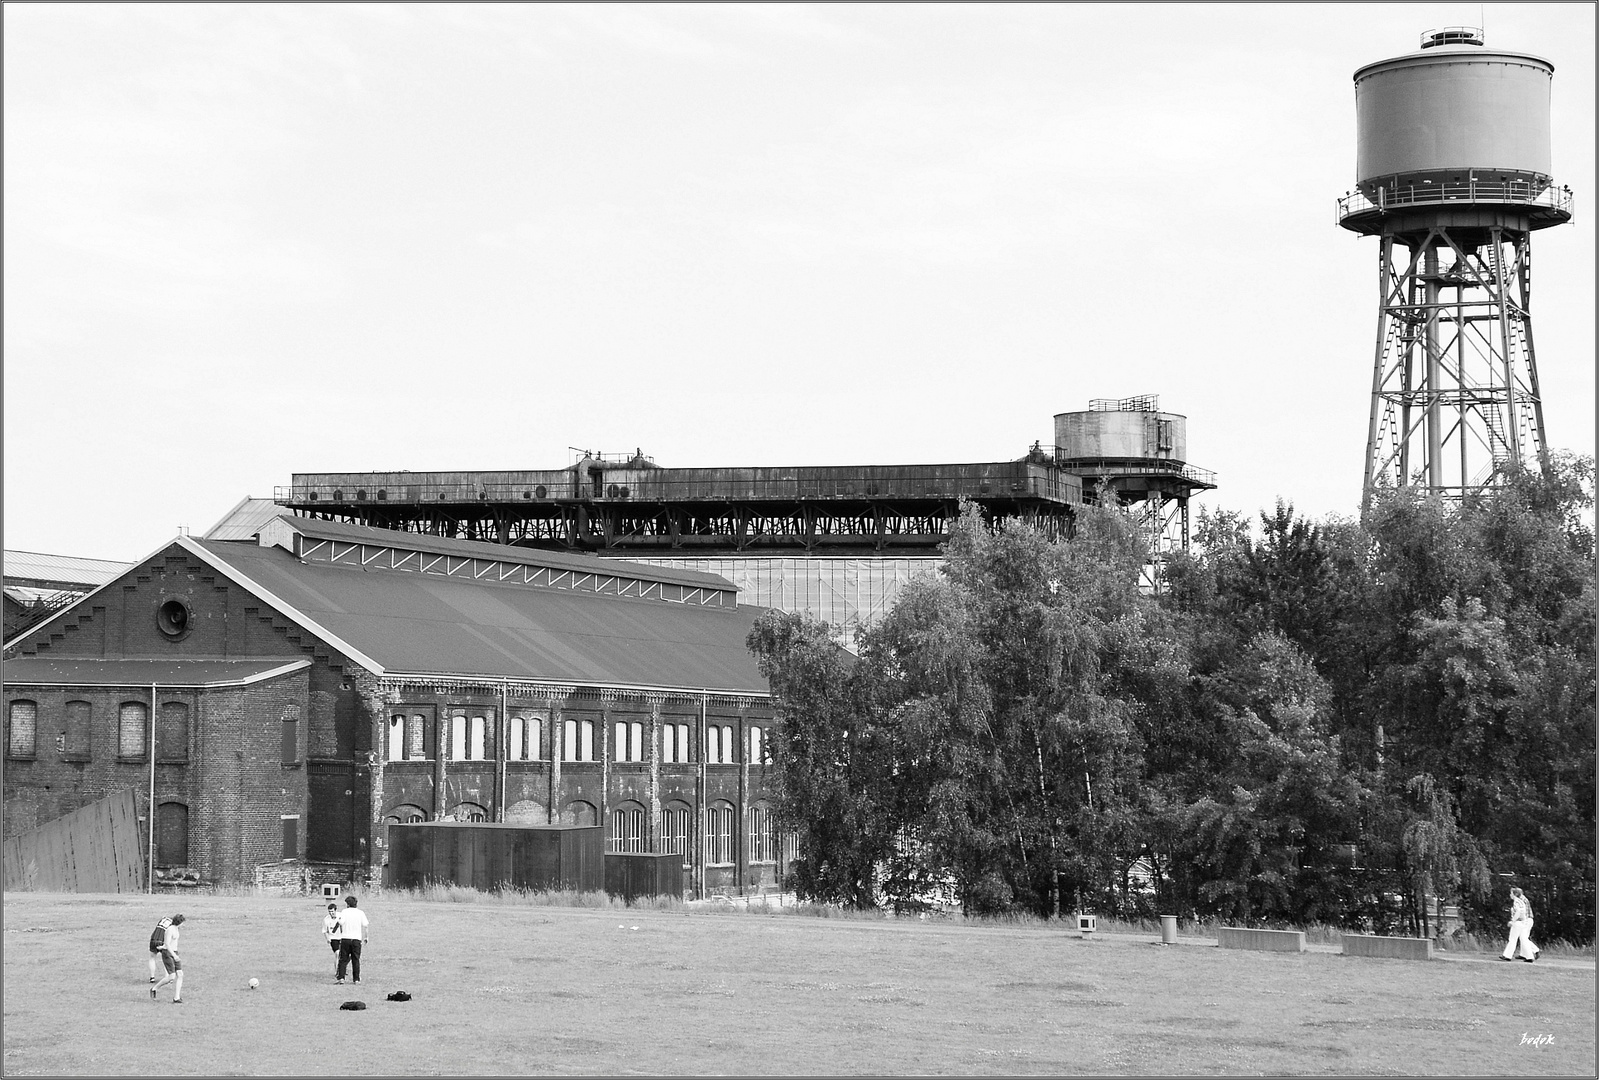 Jahrhunderthalle Bochum